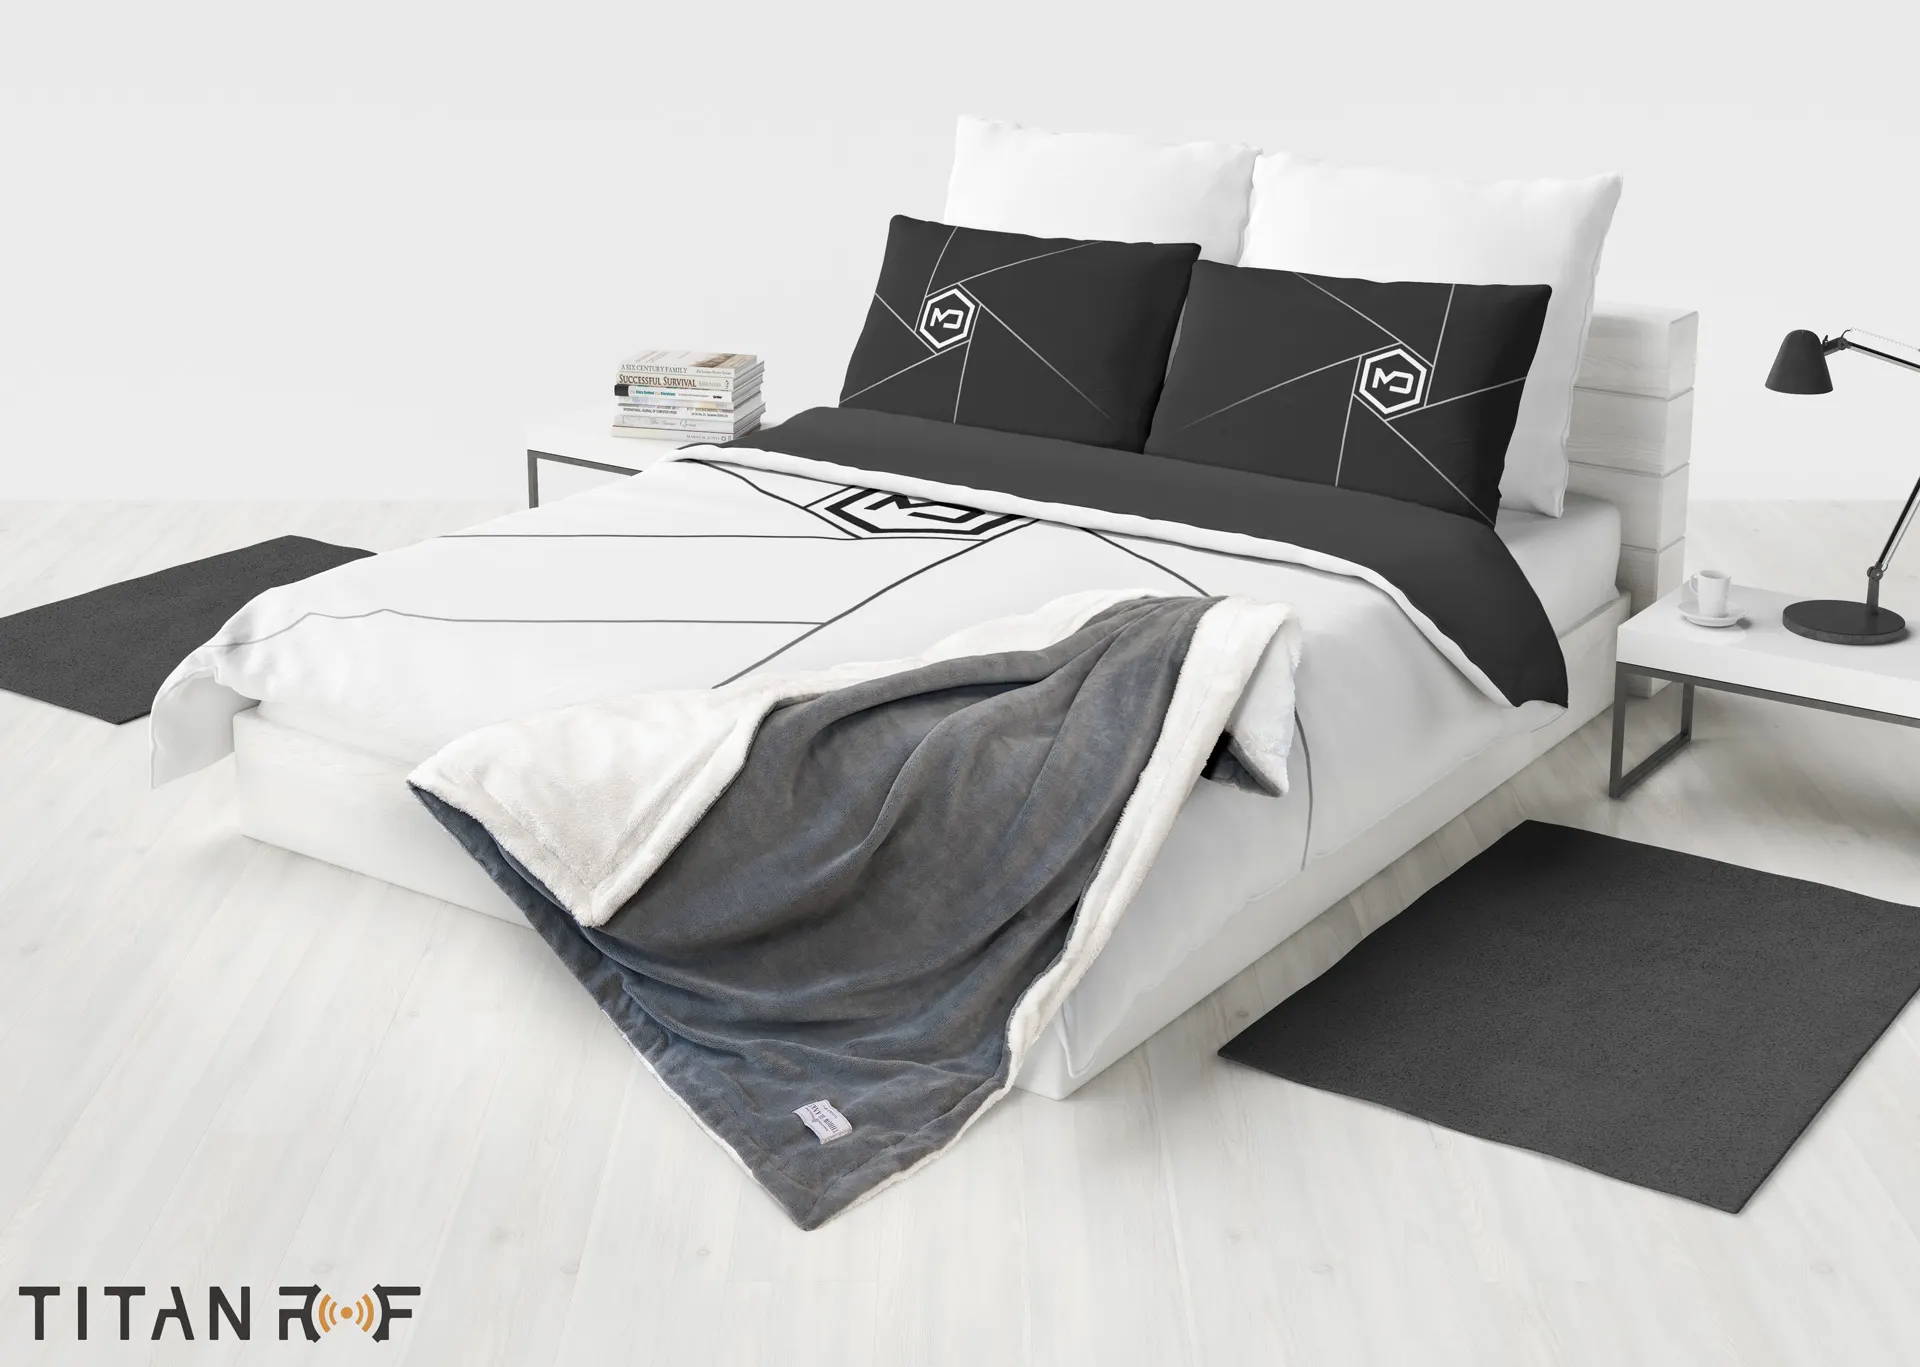 Mission Darkness TitanRF™ Radiation Shielding Throw Blanket on bed, blocks EMF